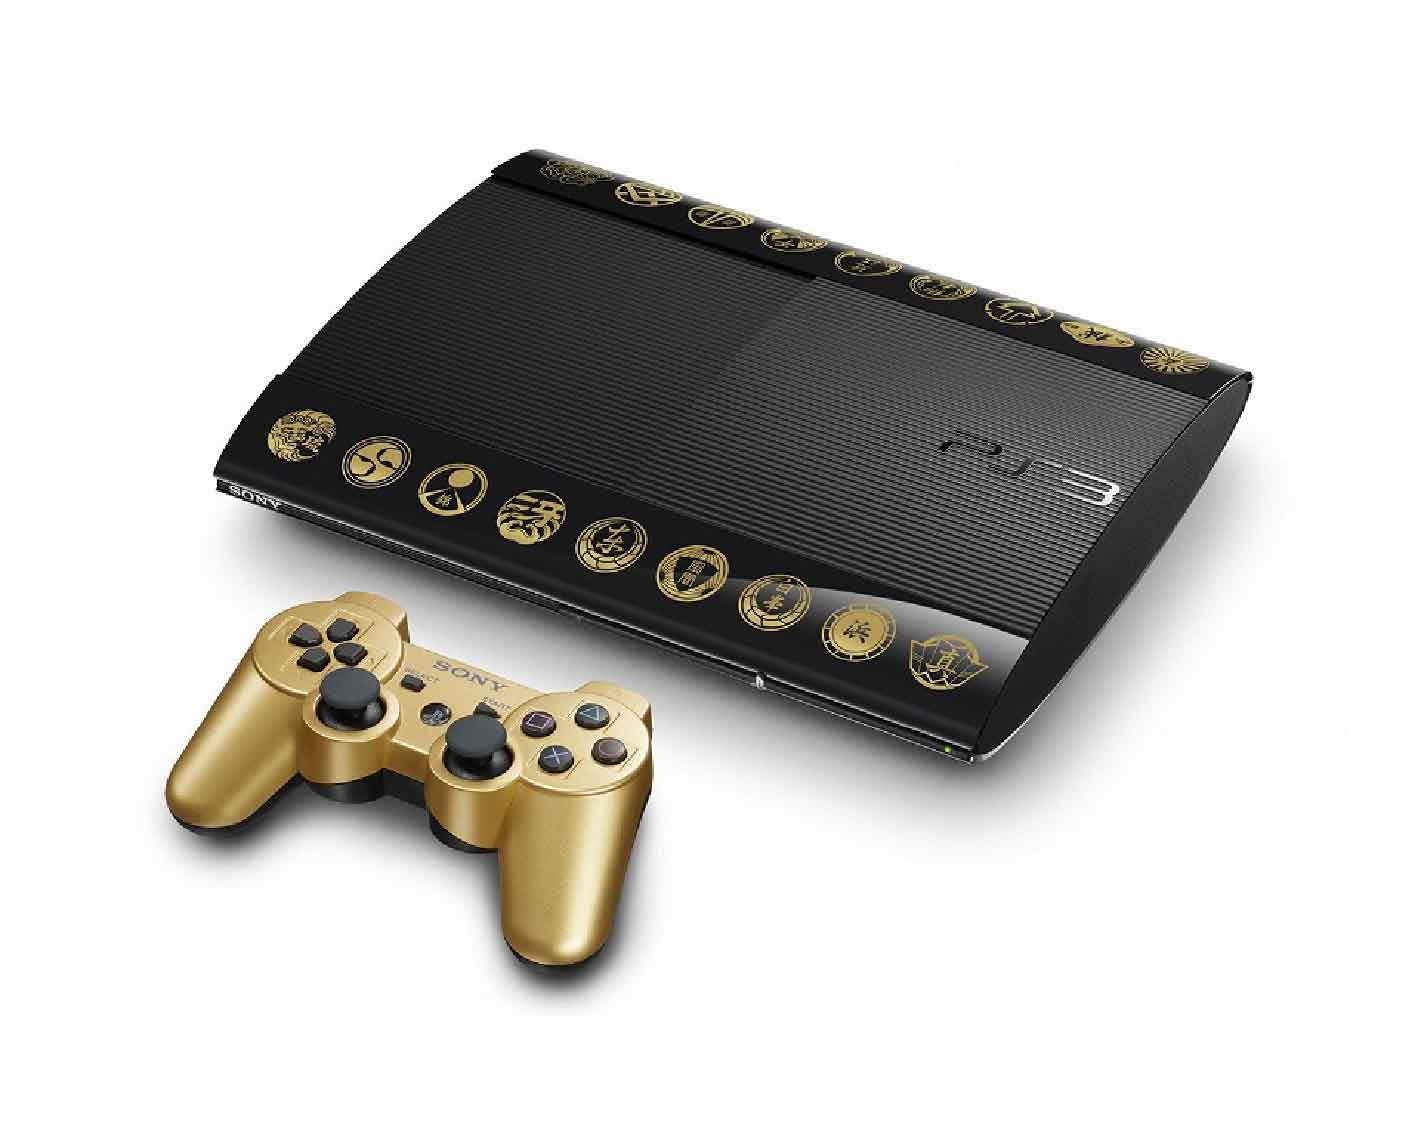 Sony Playstation 3 (PS3) Yakuza 5 Emblem LIMITED EDITION Bundle